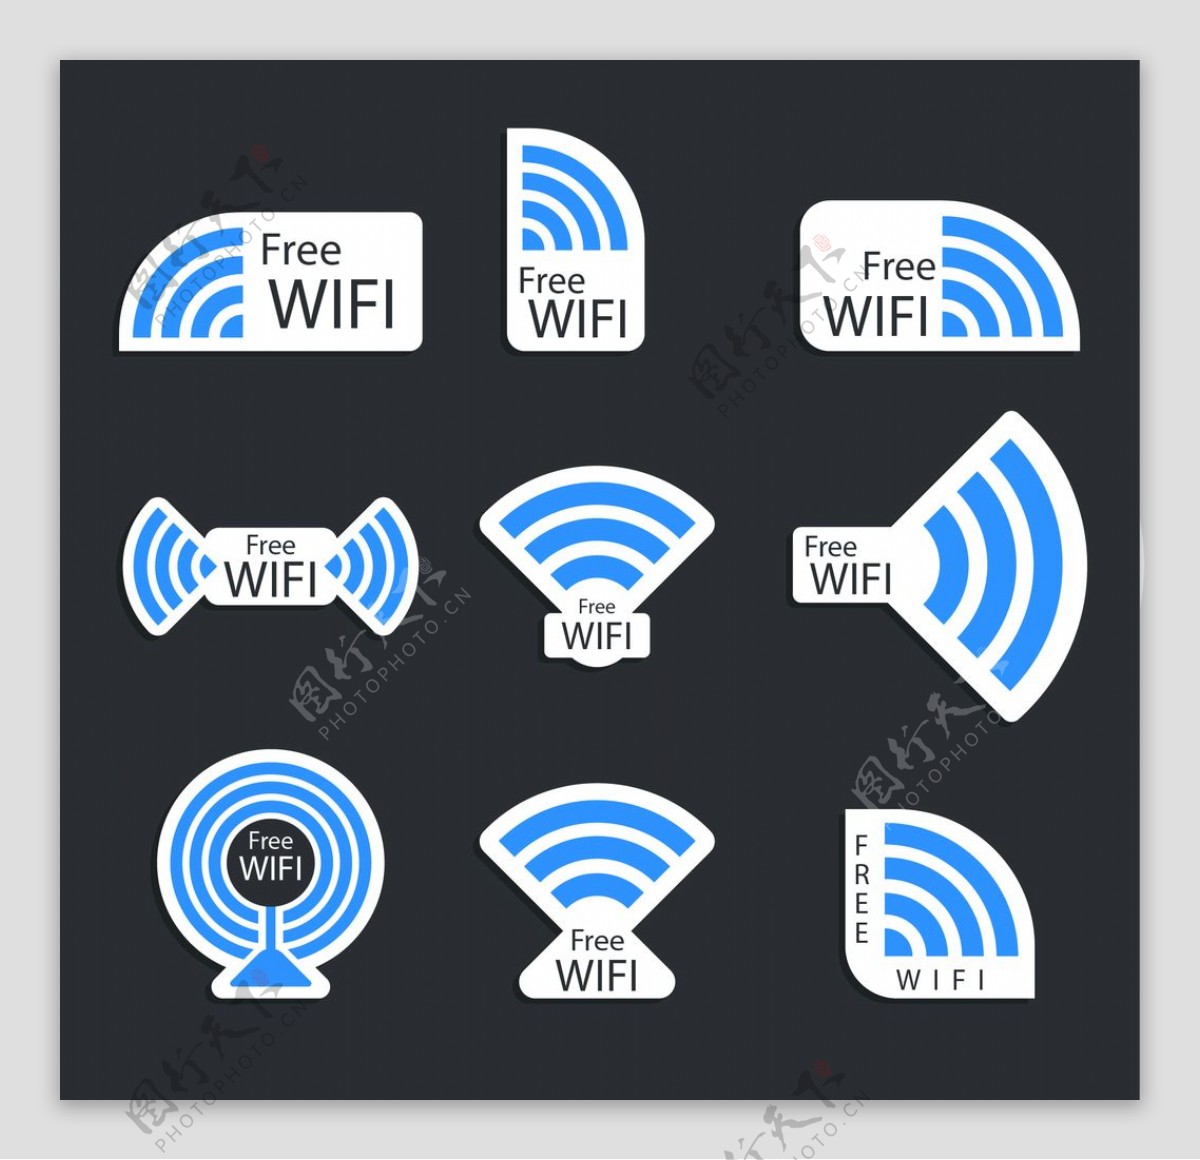 wifi信号图片大全_wifi信号素材下载-包图网